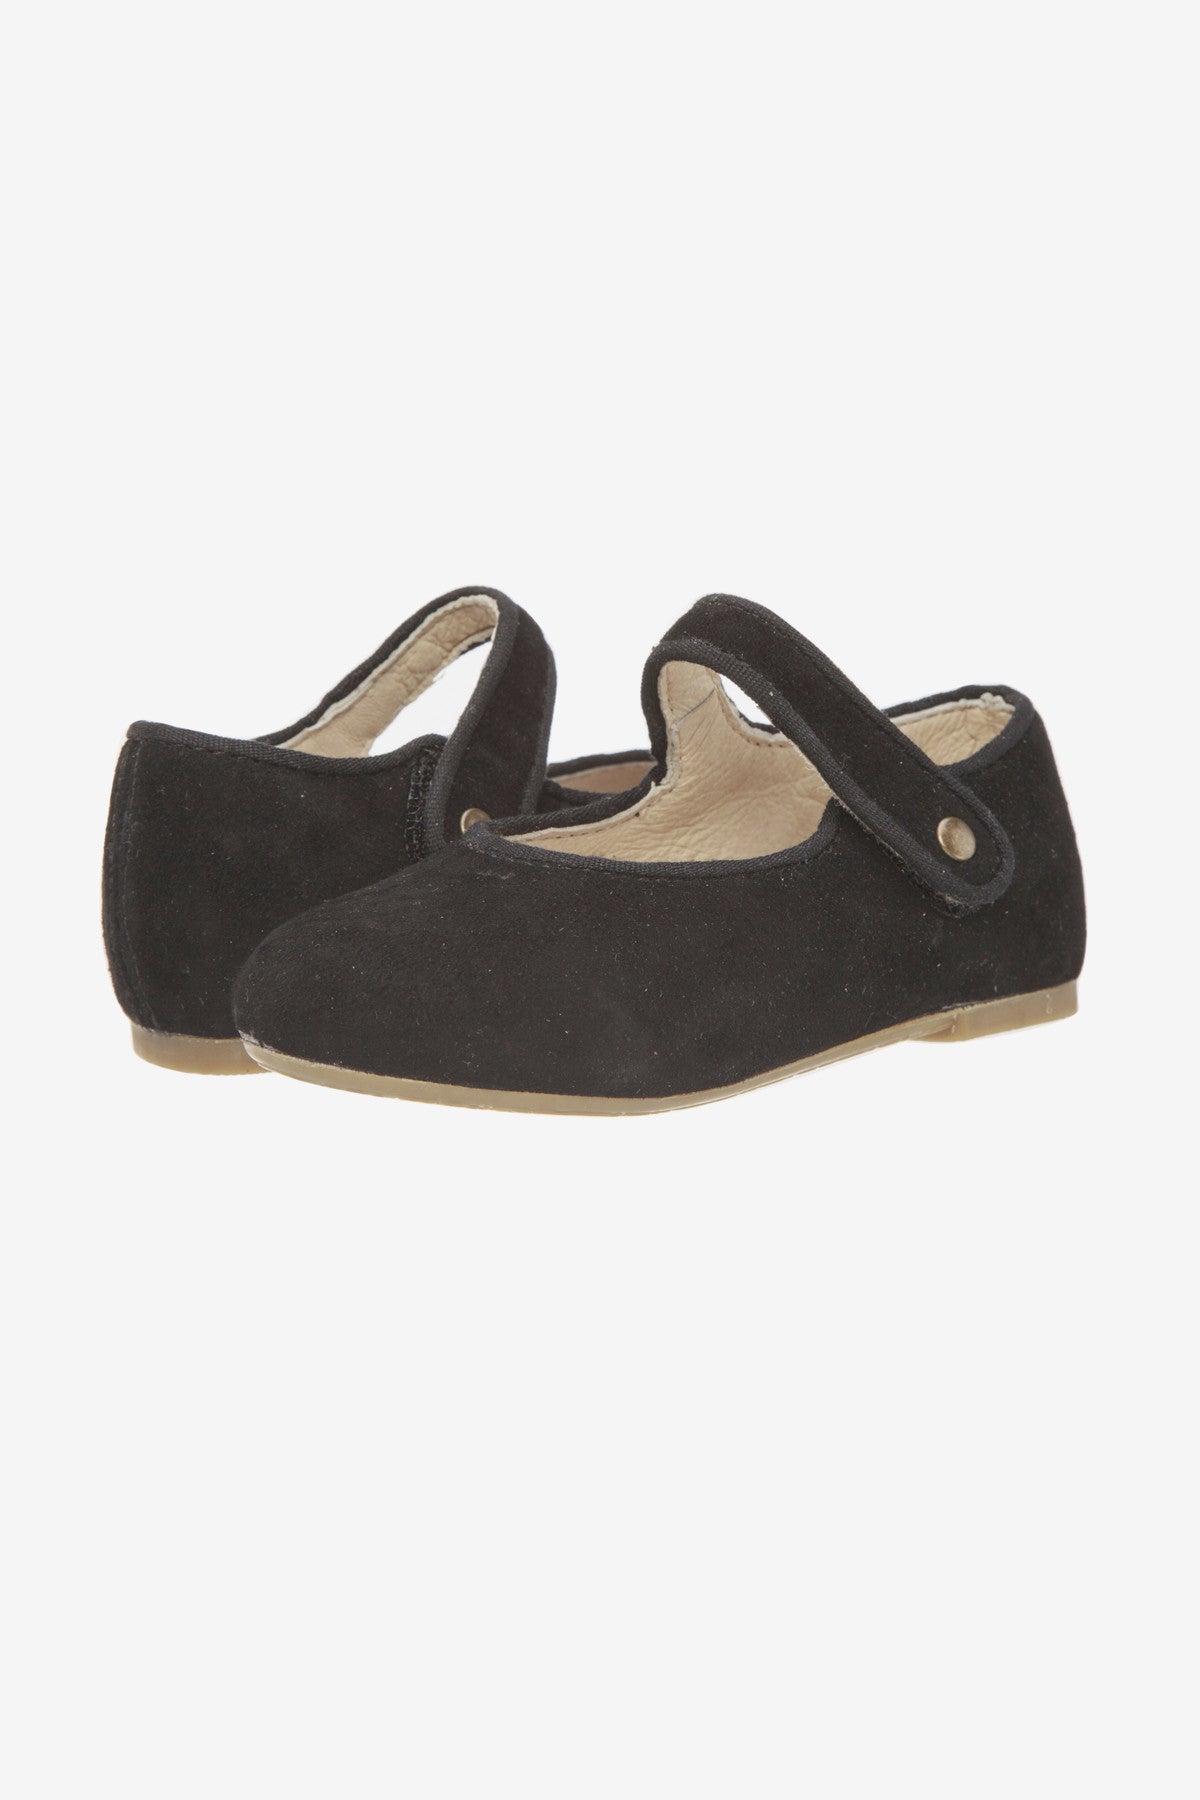 Old Soles Lady Jane Girls Shoes (Size 26EU/9.5 left) – Mini Ruby